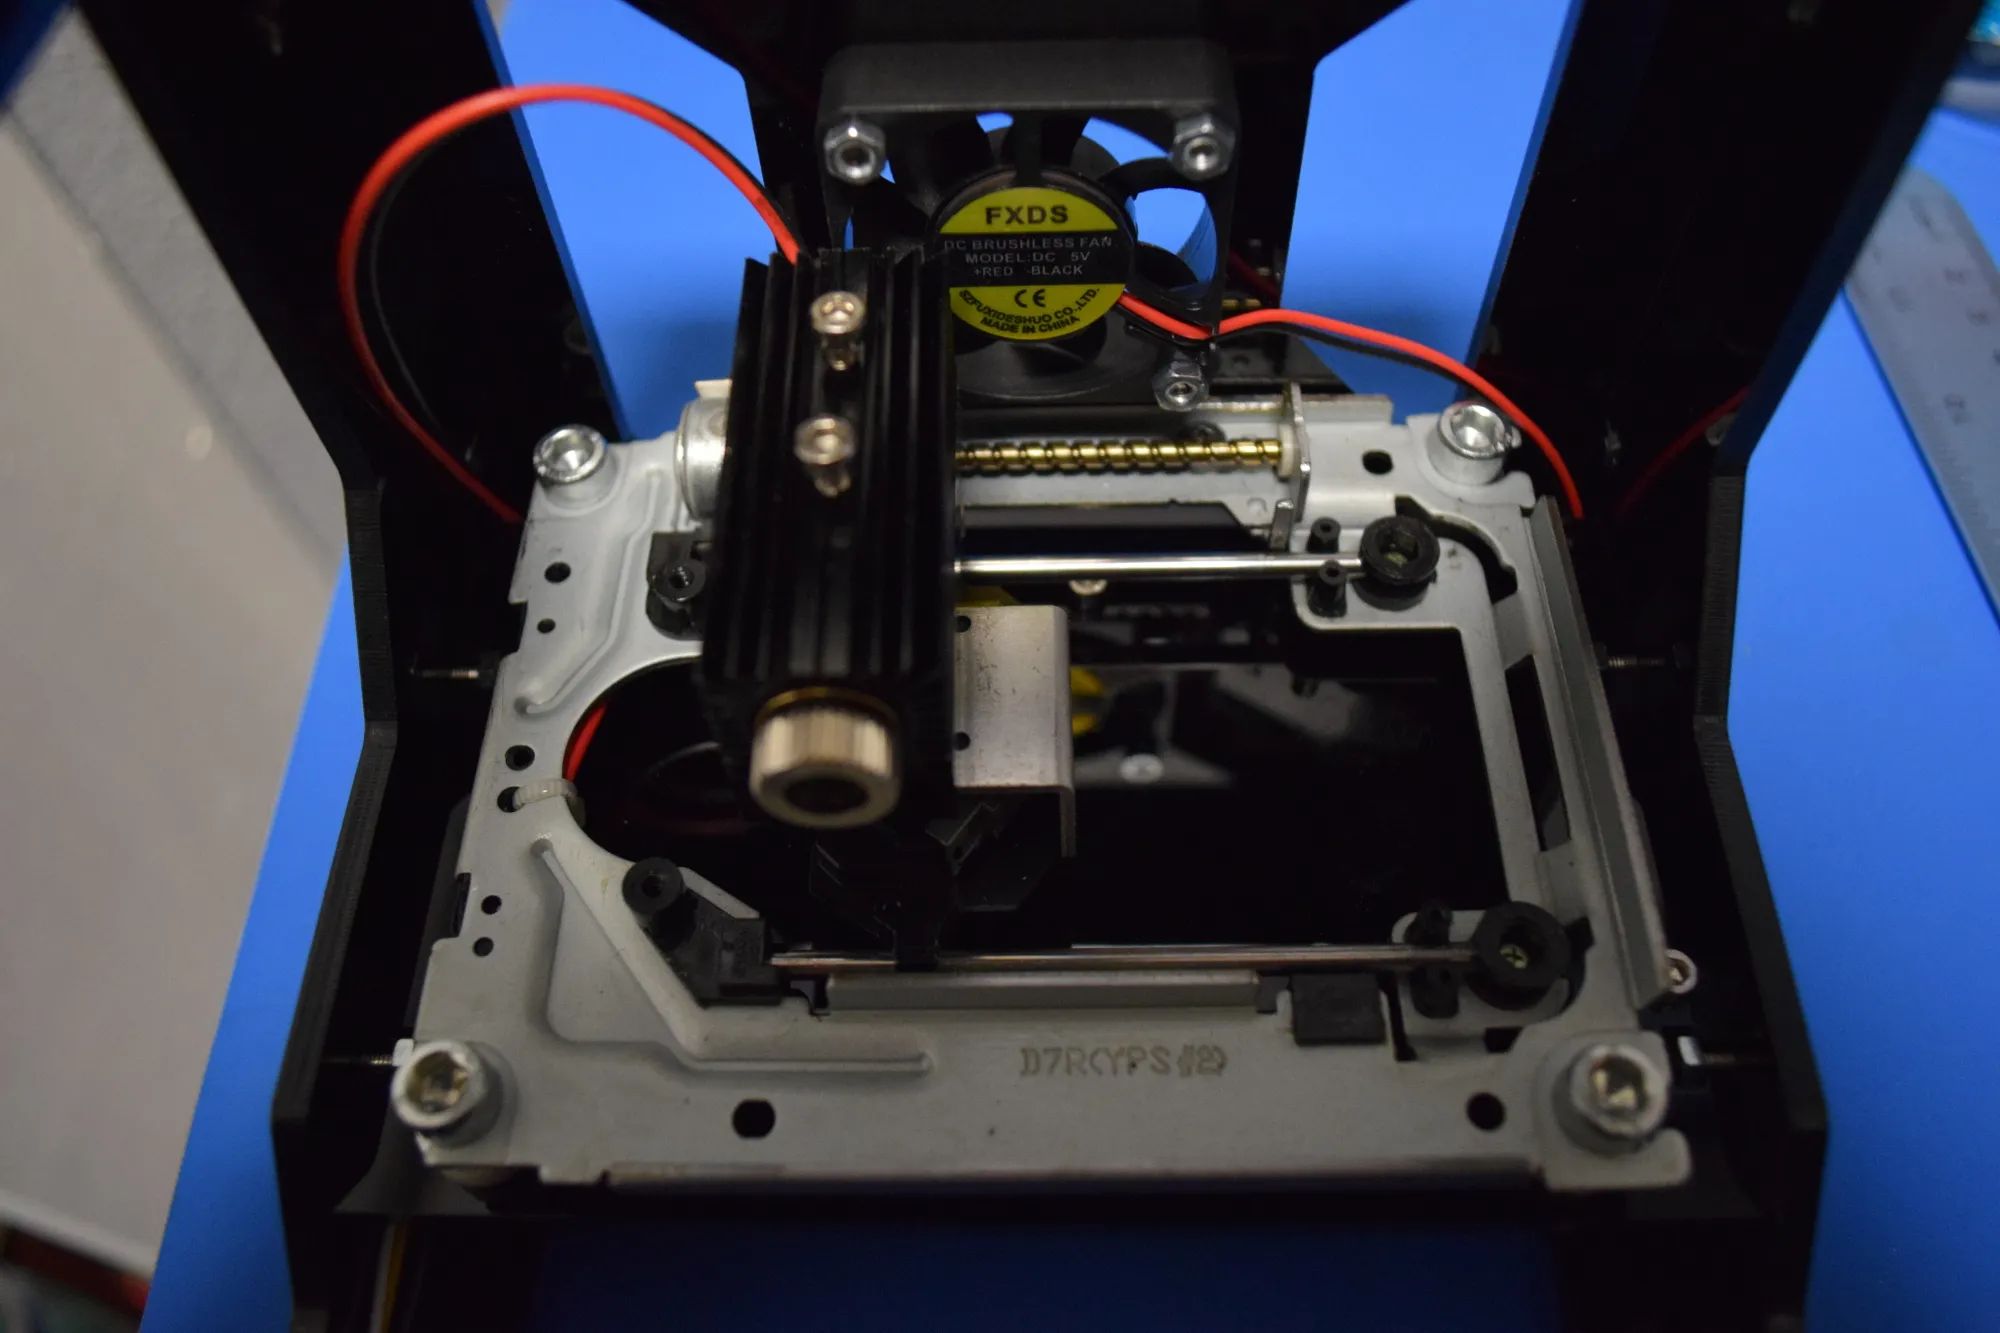 What Can The NEJE DK-8-KZ 1000mW Laser Engraver Printer Cut On